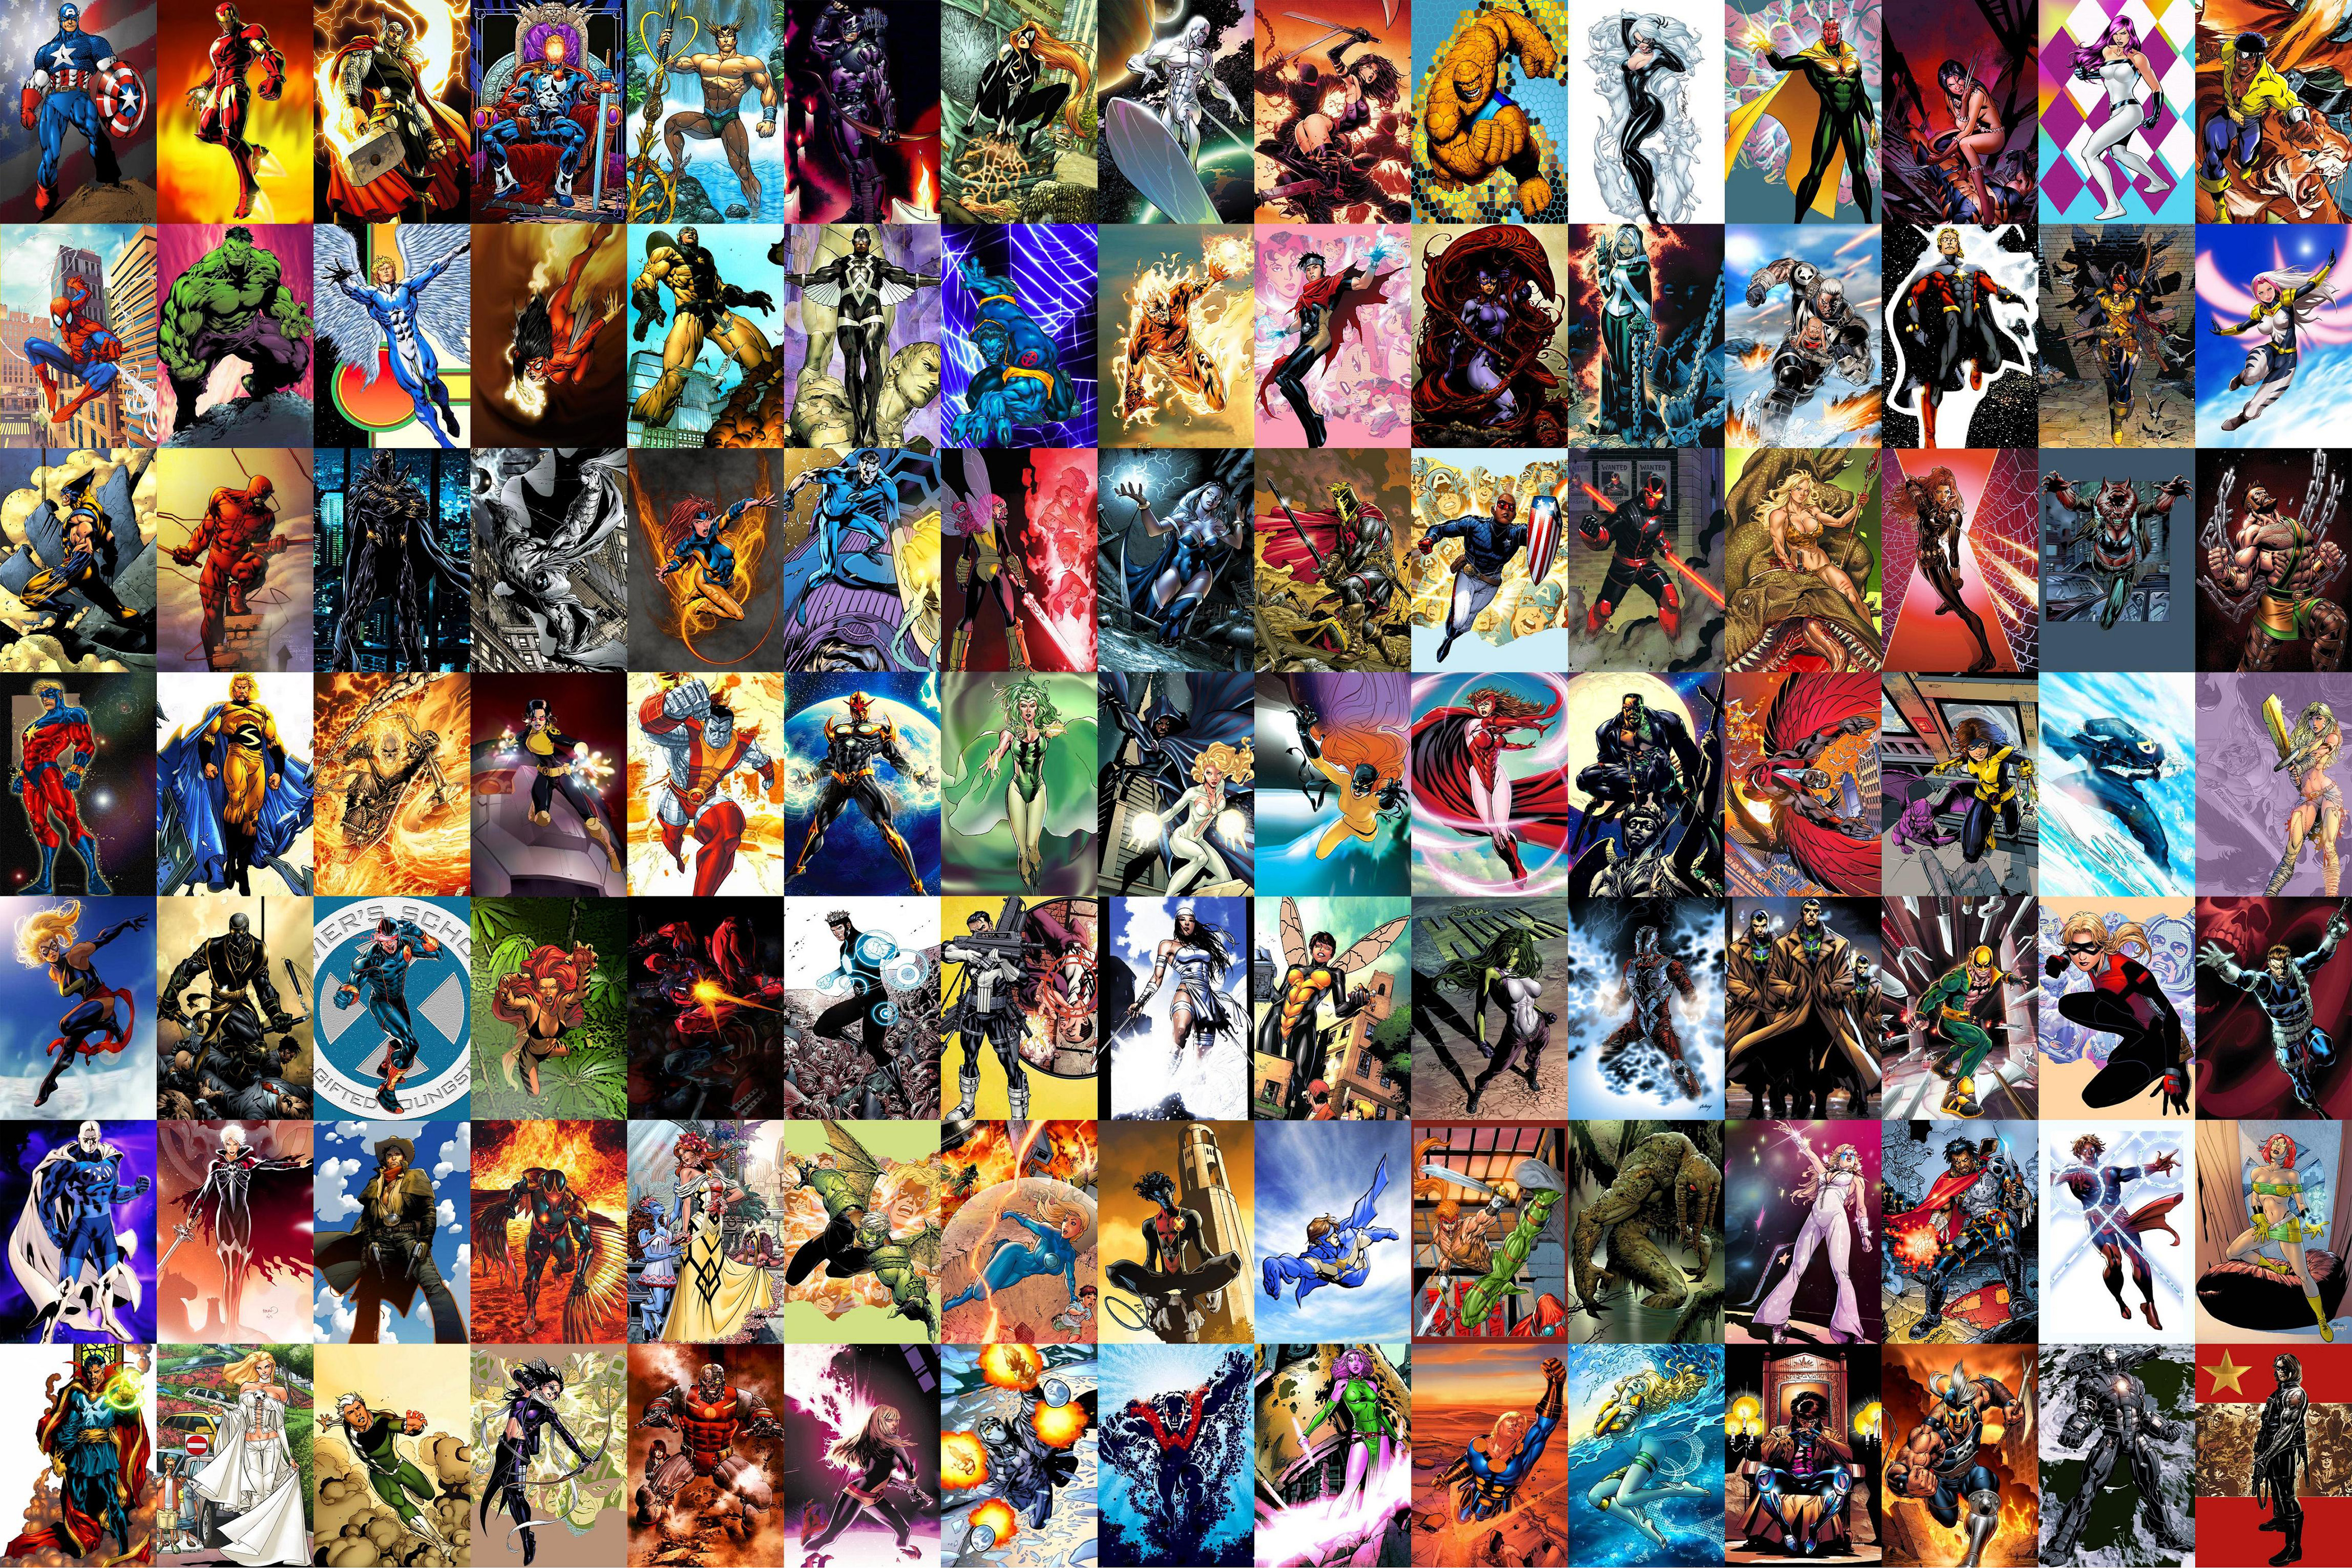 comics, marvel comics, angel (marvel comics), beast (marvel comics), ben grimm, bishop (marvel comics), black bolt, black cat (marvel comics), black panther (marvel comics), black widow, captain america, captain marvel, cassandra lang, cloak (marvel comics), colossus, cyclops (marvel comics), dagger (marvel comics), daredevil, dazzler (marvel comics), deadpool, deathlok, doctor strange, emma frost, falcon (marvel comics), gambit (marvel comics), ghost rider, havok (marvel comics), hawkeye, hellcat (marvel comics), hercules (marvel comics), hulk, human torch (marvel comics), invisible woman, iron fist (marvel comics), iron man, jean grey, jessica jones, johnny storm, jubilee (marvel comics), kitty pryde, lockheed (marvel comics), luke cage, magik (marvel comics), man thing, medusa (marvel comics), mister fantastic, moon knight, ms marvel, namor the sub mariner, nick fury, nightcrawler (marvel comics), nova (marvel comics), phoenix (marvel comics), pixie (marvel comics), power man, psylocke (marvel comics), punisher, quicksilver (marvel comics), rachel summers, reed richards, rogue (marvel comics), scarlet witch, sentinel (marvel comics), sentry (marvel comics), shanna the she devil, she hulk, silver surfer, spider man, spider woman, storm (marvel comics), sub mariner, susan storm, t'challa, the cat (marvel comics), thing (marvel comics), thor, tigra (marvel comics), vision (marvel comics), war machine, wasp (marvel comics), white witch (marvel comics), wiccan (marvel comics), winter soldier, wolverine, wonder man, x 23, yellowjacket (marvel comics) images